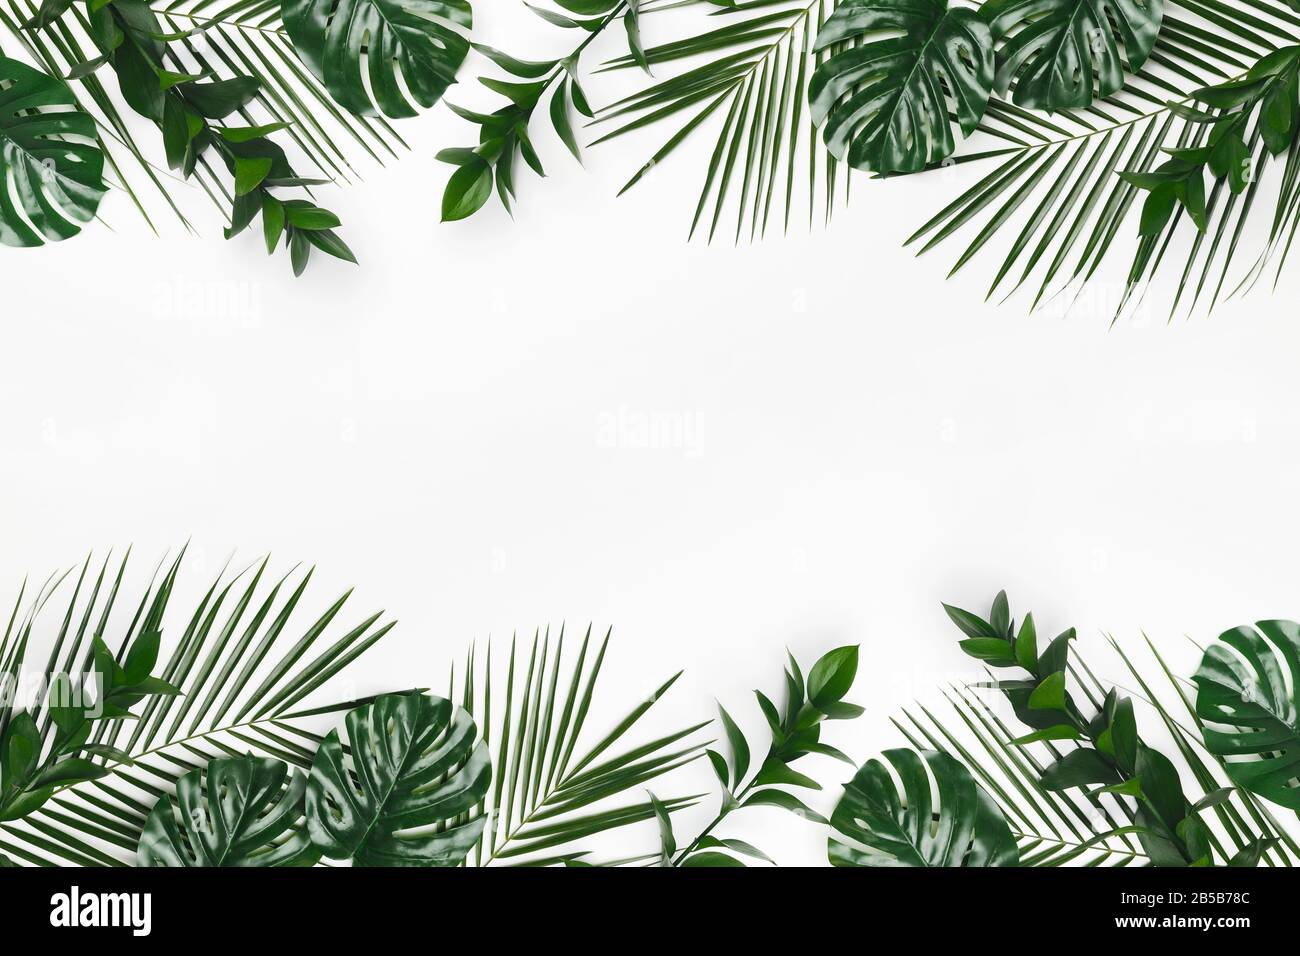 Naturale verde piatto foglie di palma tropicale distese su bianco Foto  stock - Alamy